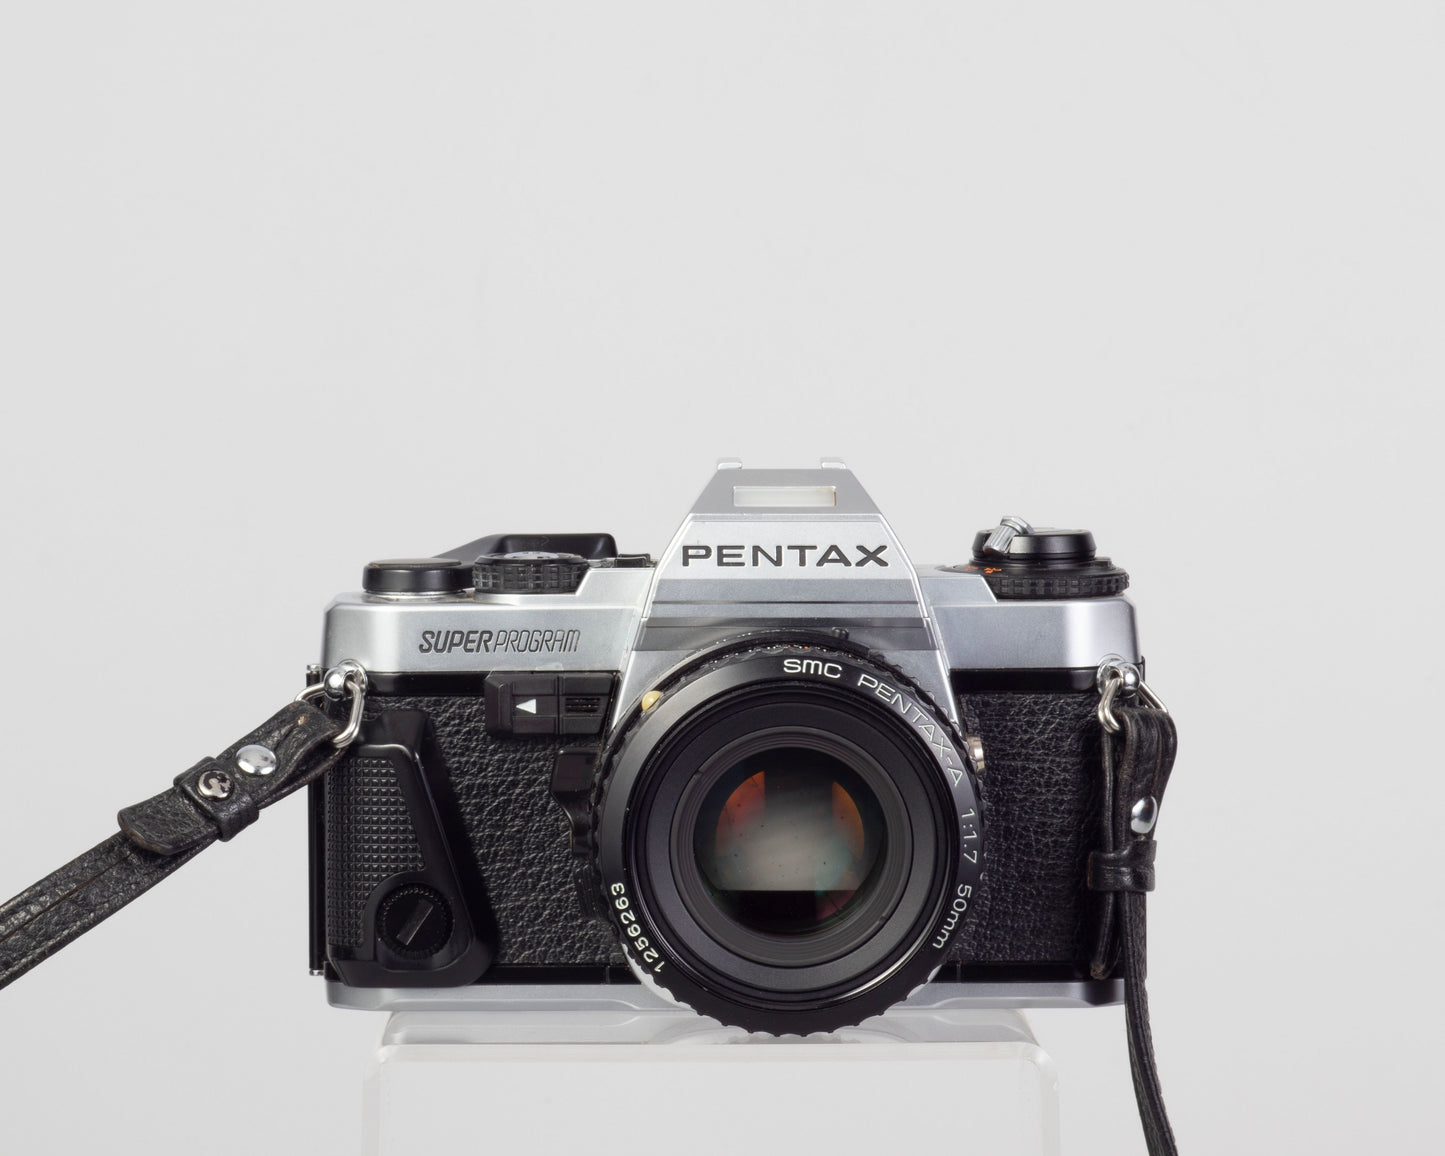 Reflex Pentax Super Program 35 mm avec objectif SMC Pentax A 50 mm f1.7 + ME Winder II + manuel d'origine